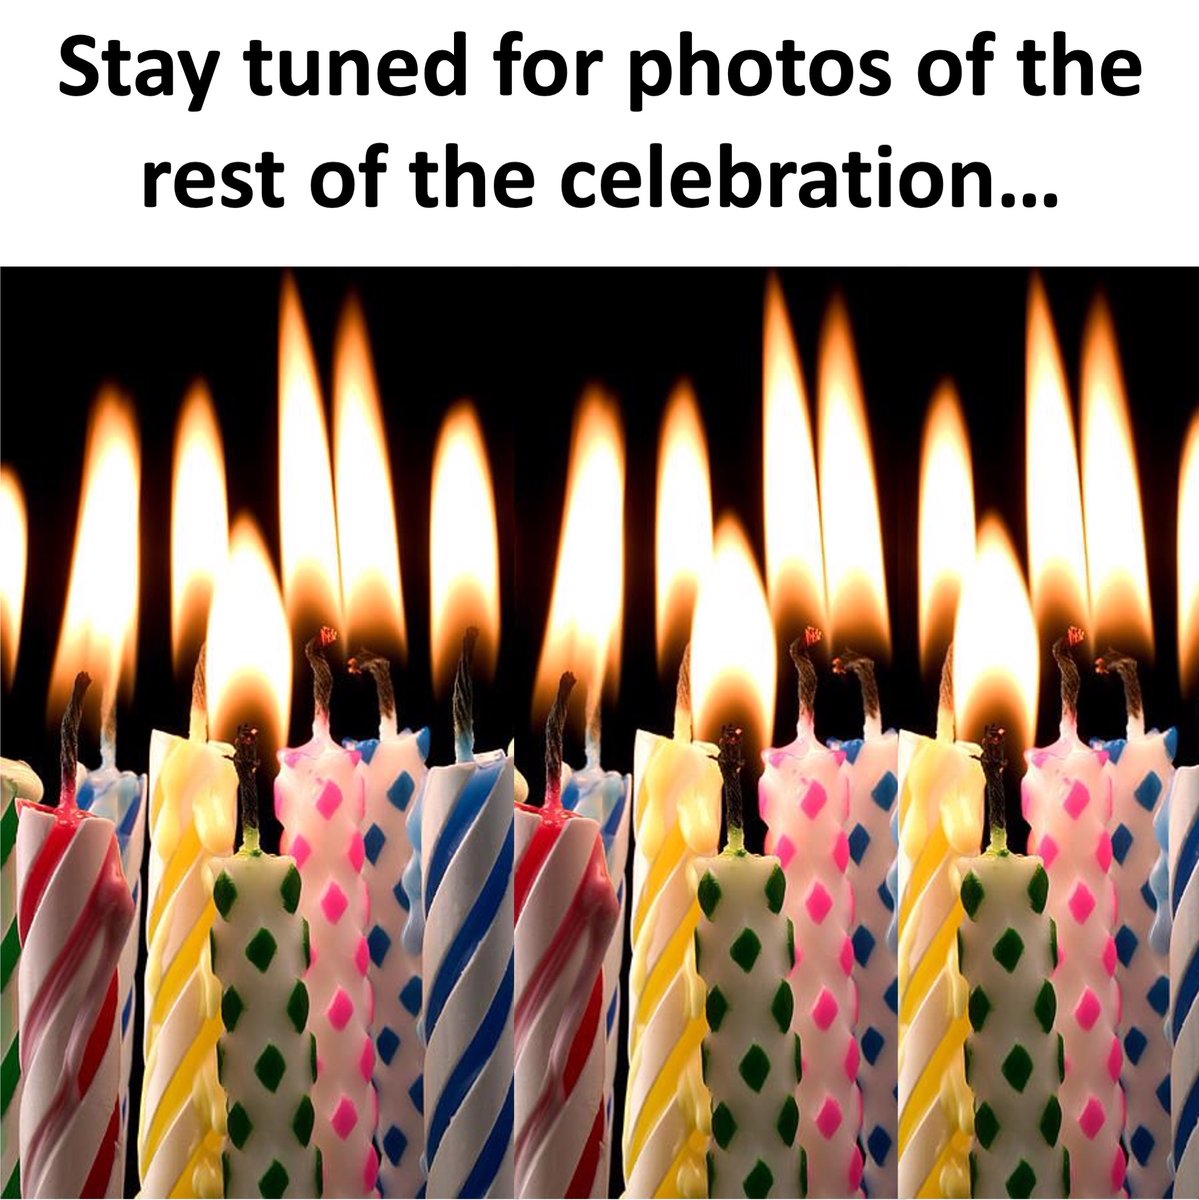 #turqlebrands #birthday #ukuva #party #celebration #milestone #capetreasures #birthdayparty #fairtrade #wfto #candles #milestonebirthday #food #proudlysouthafrican #buylocalbuildafrica #staytuned